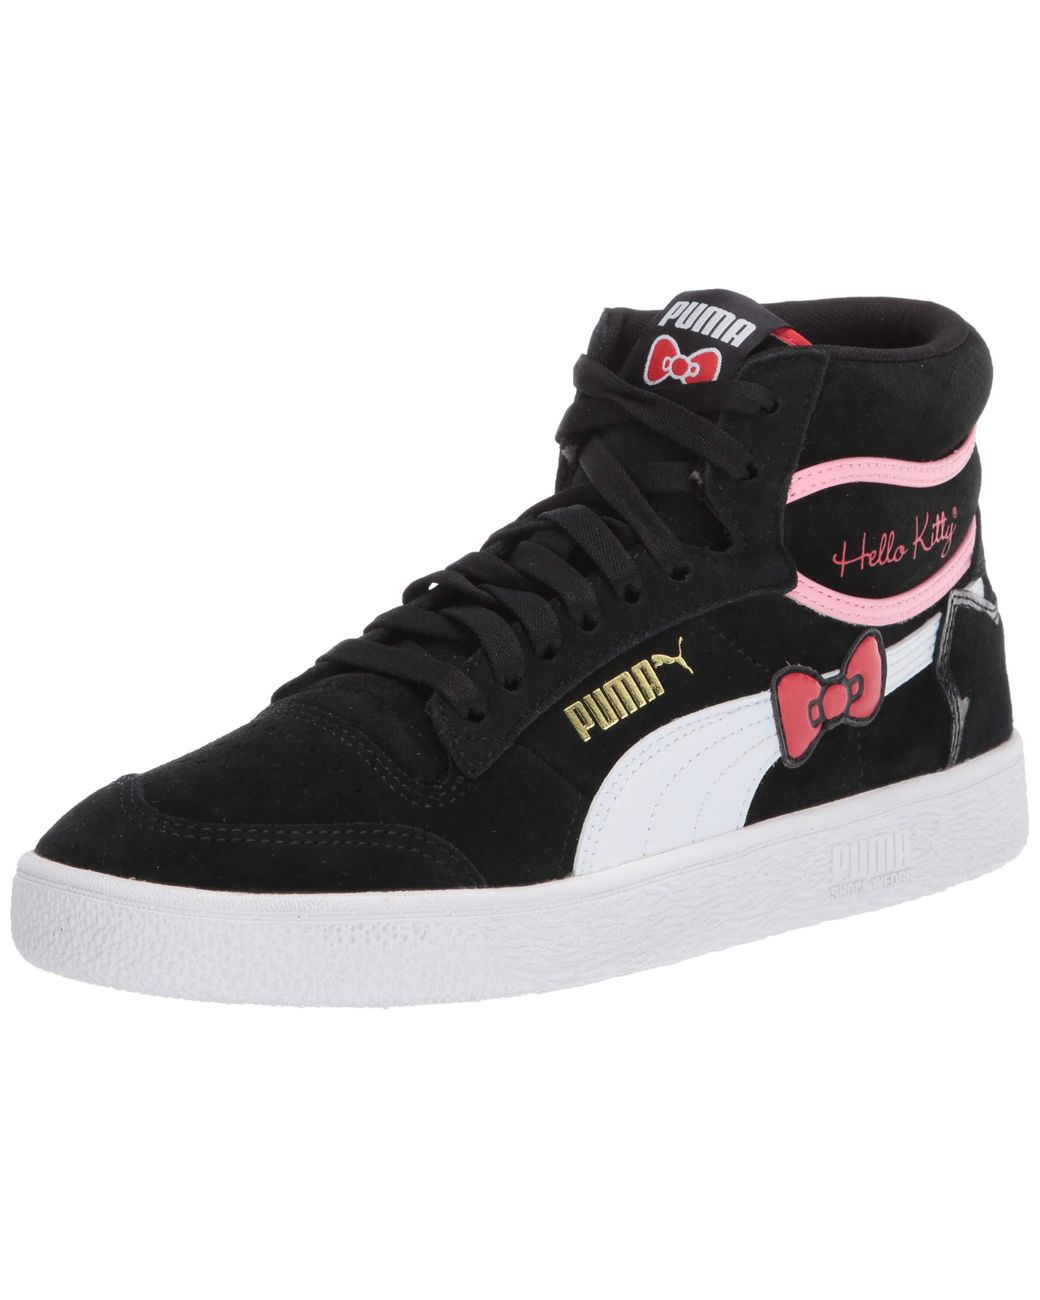 PUMA X Hello Kitty Ralph Sampson Mid Women's Sneakers in Black | Lyst UK